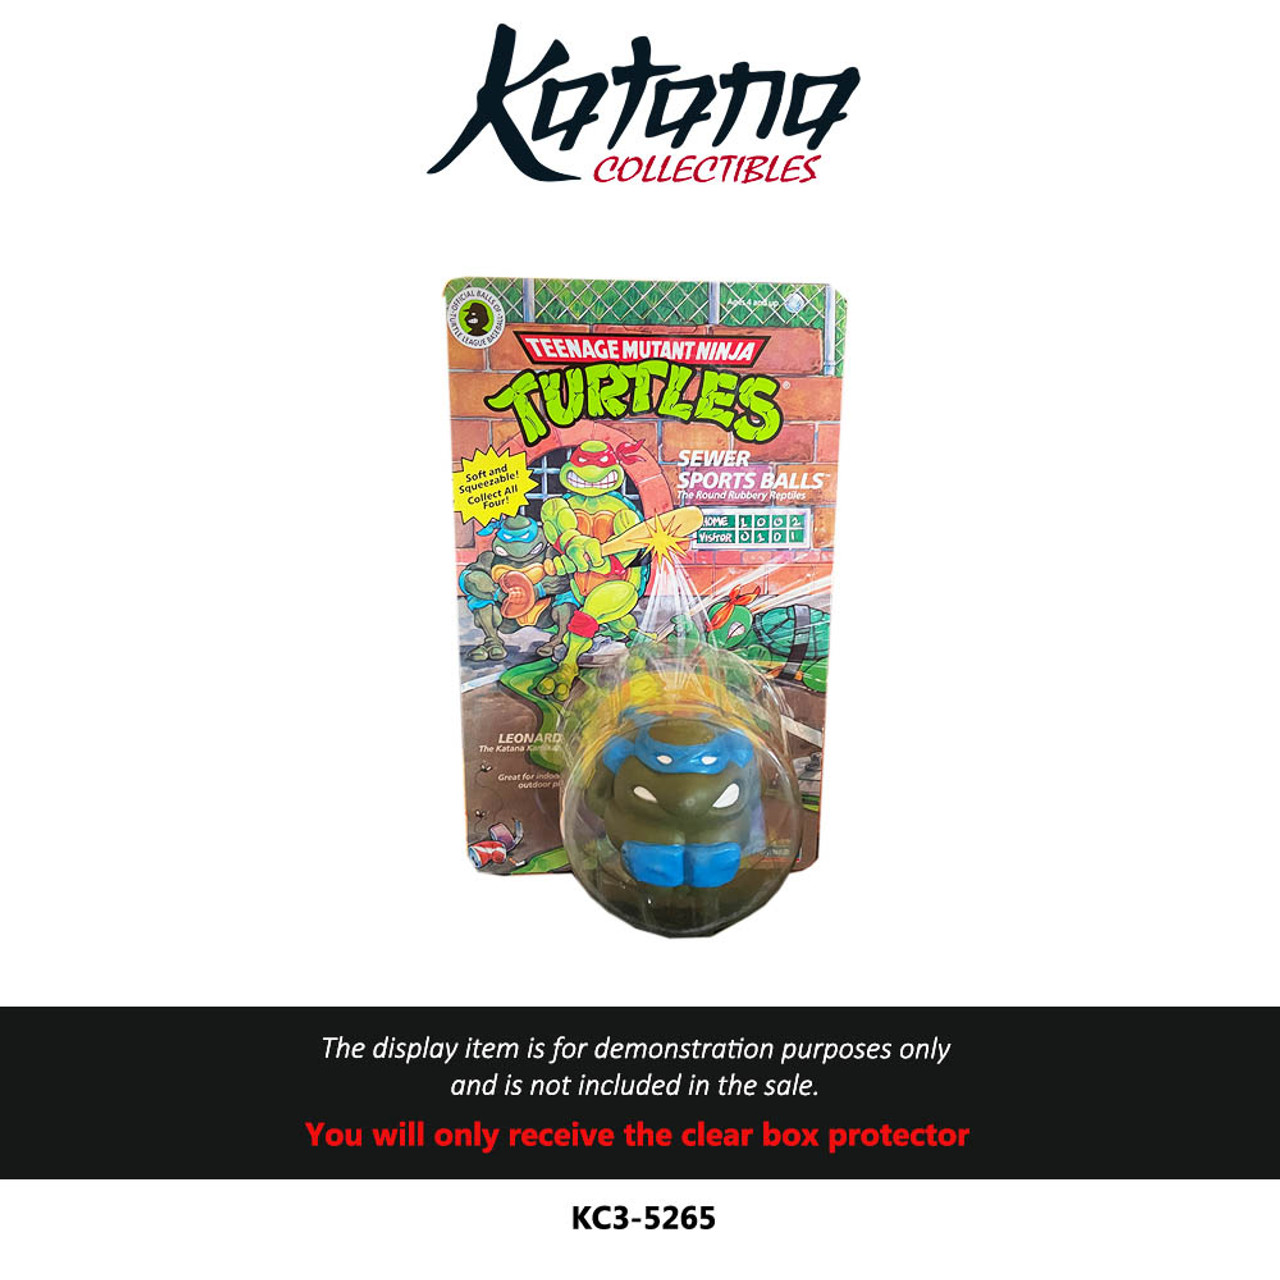 Katana Collectibles Protector For Sewer Sports Balls